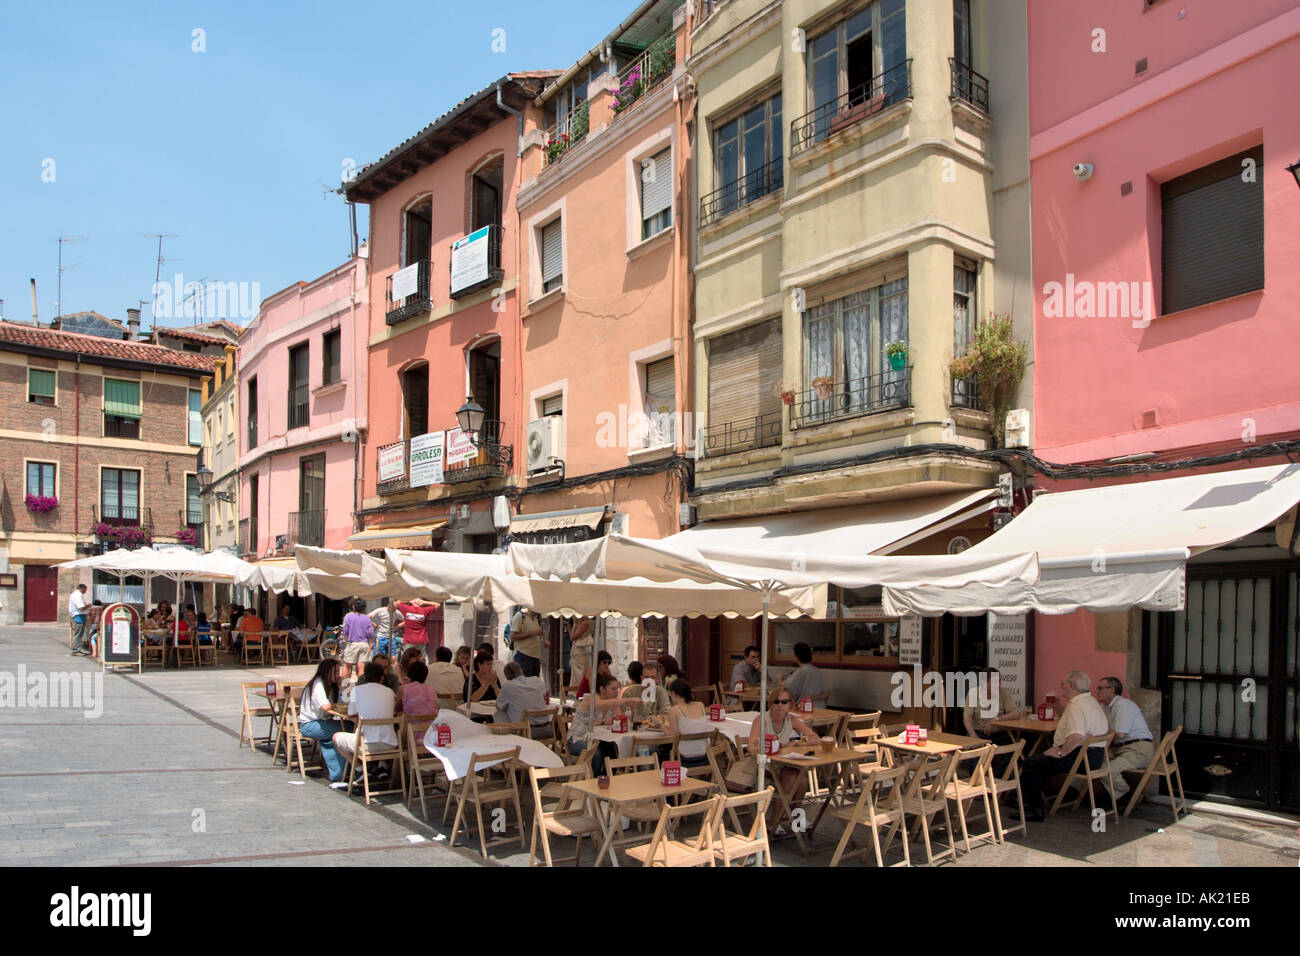 Sidewalk cafe in the Barrio Humedo, Plaza de San Martin, Leon, Castilla y Leon, Spain Stock Photo